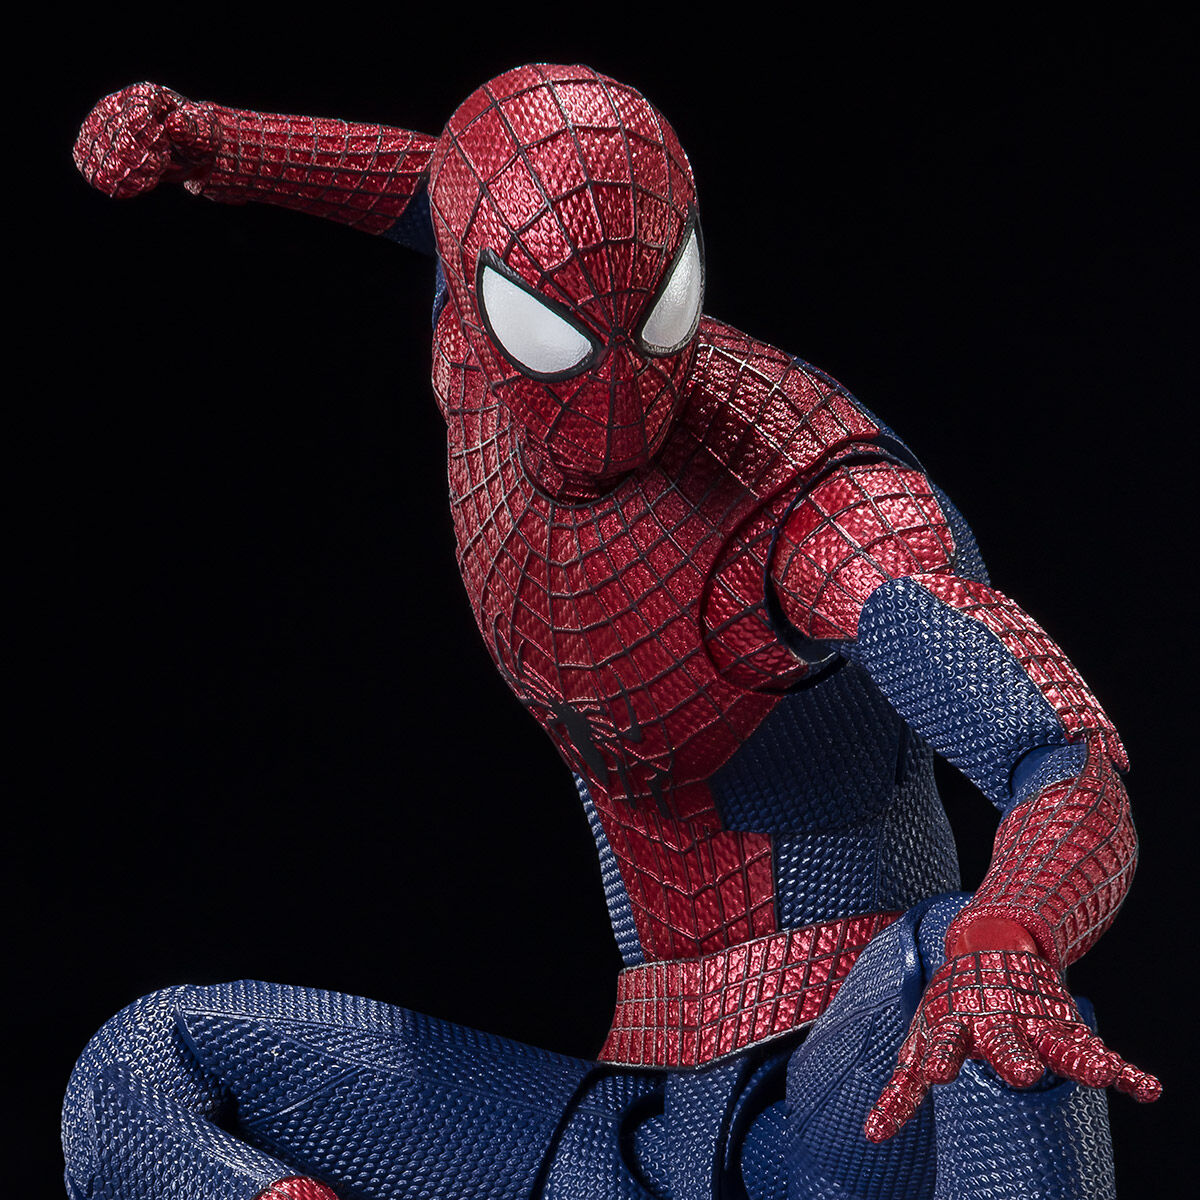 The Amazing Spider-Man 2 Spider-Man Figure S.H.Figuarts